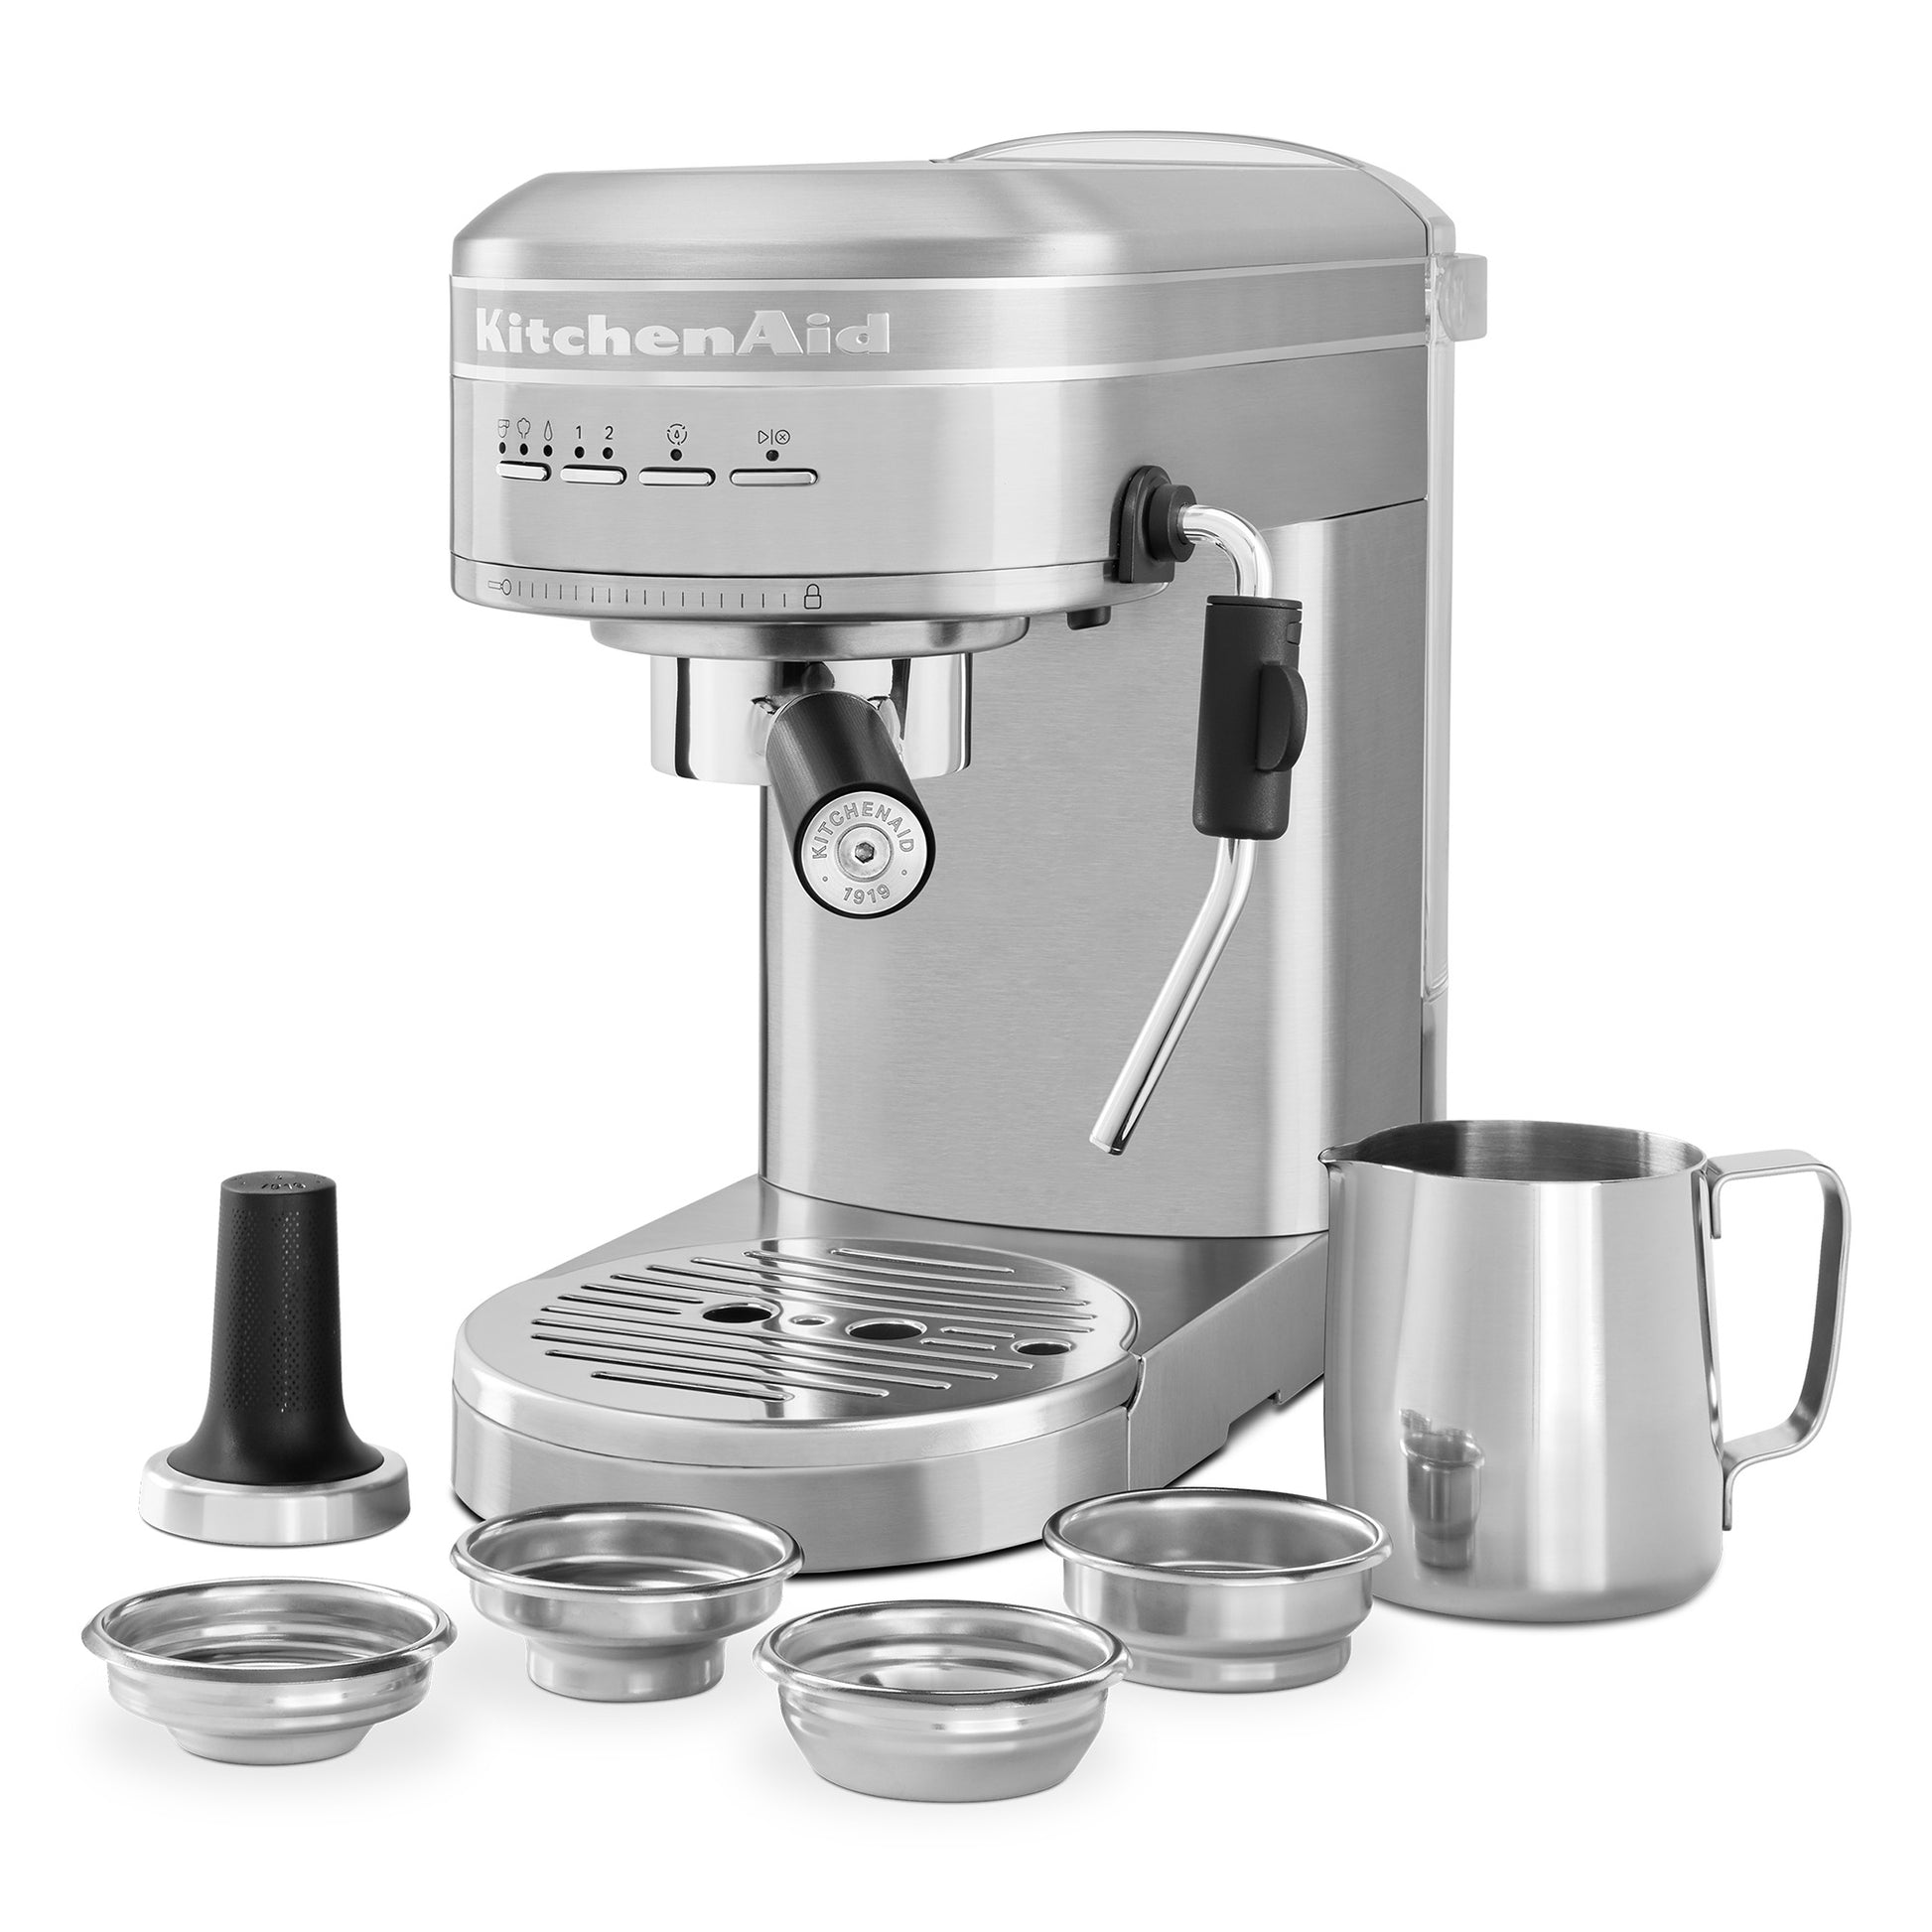 User manual KitchenAid Artisan Espressomachine (English - 16 pages)